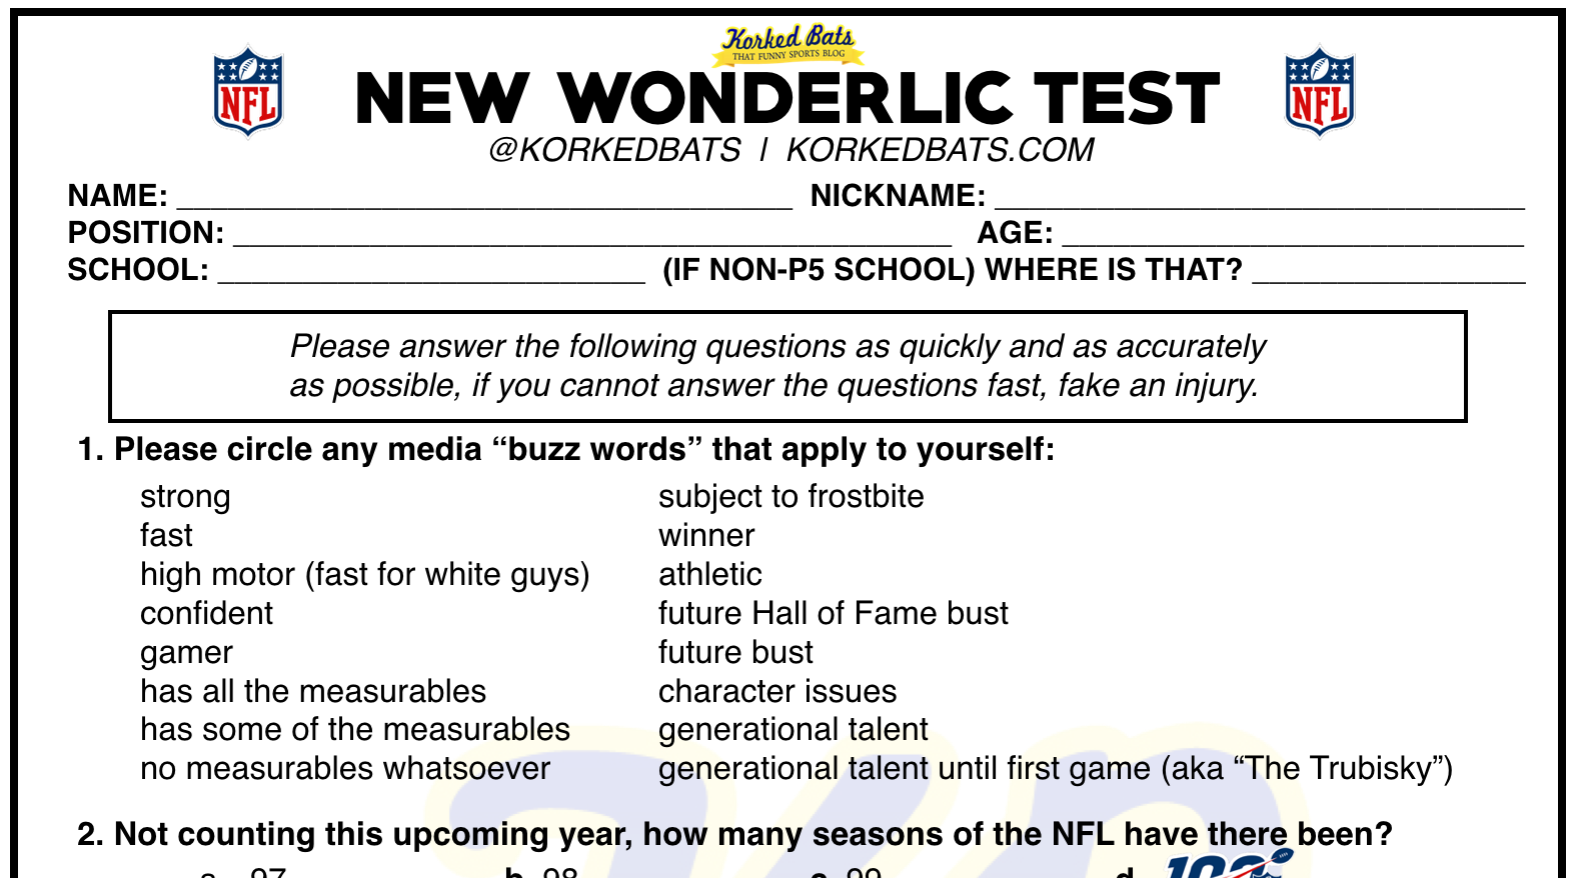 The NFL's New Wonderlic Test 2020